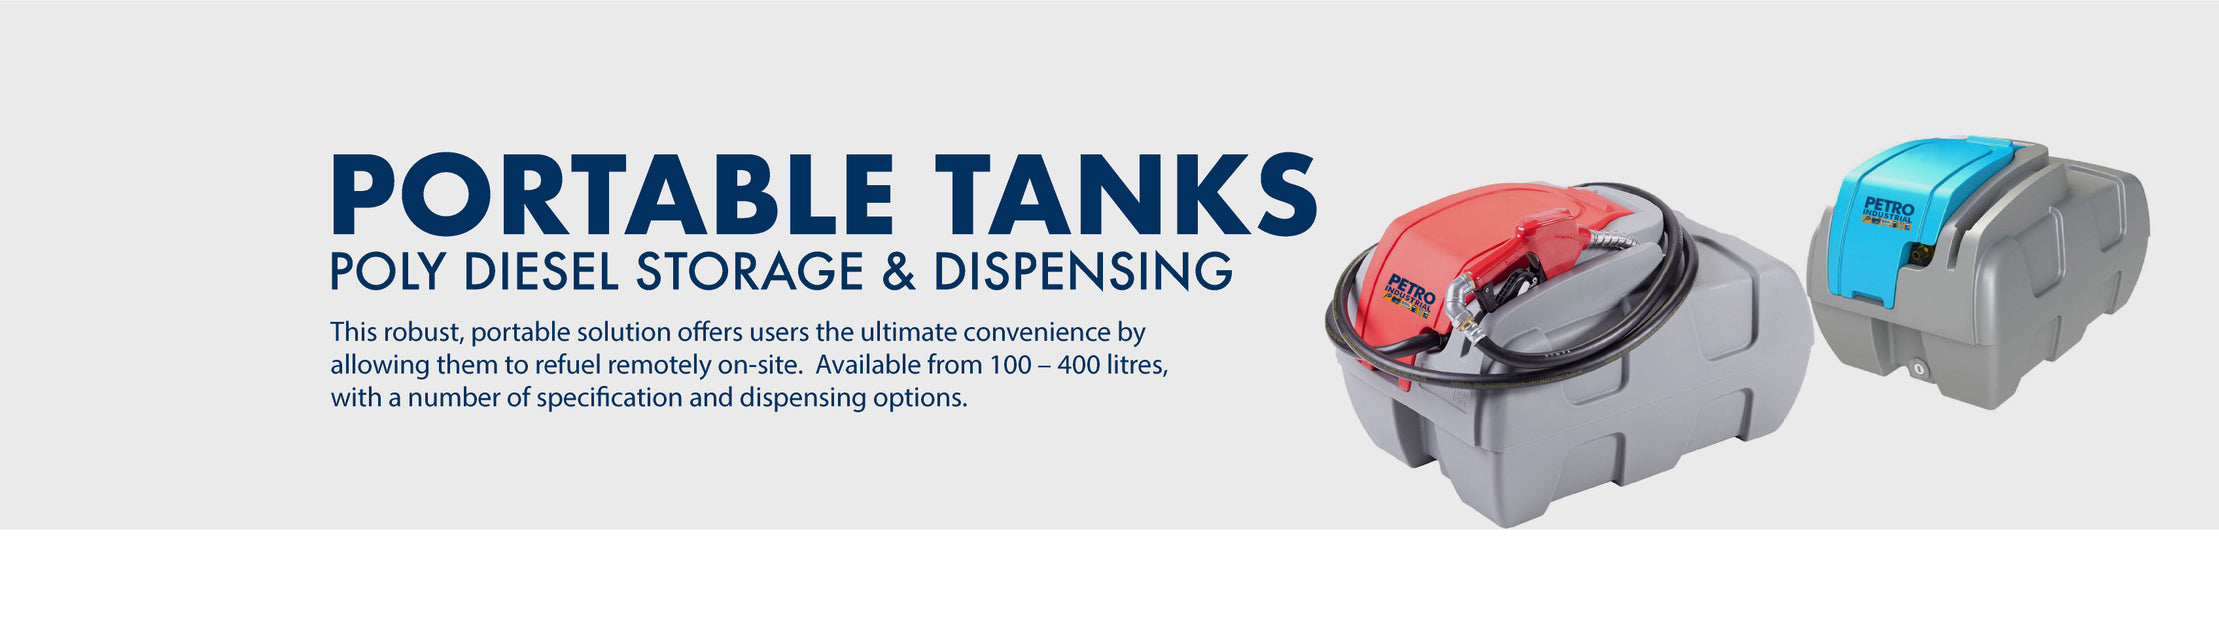 400 Litre Portable Poly Diesel Tank